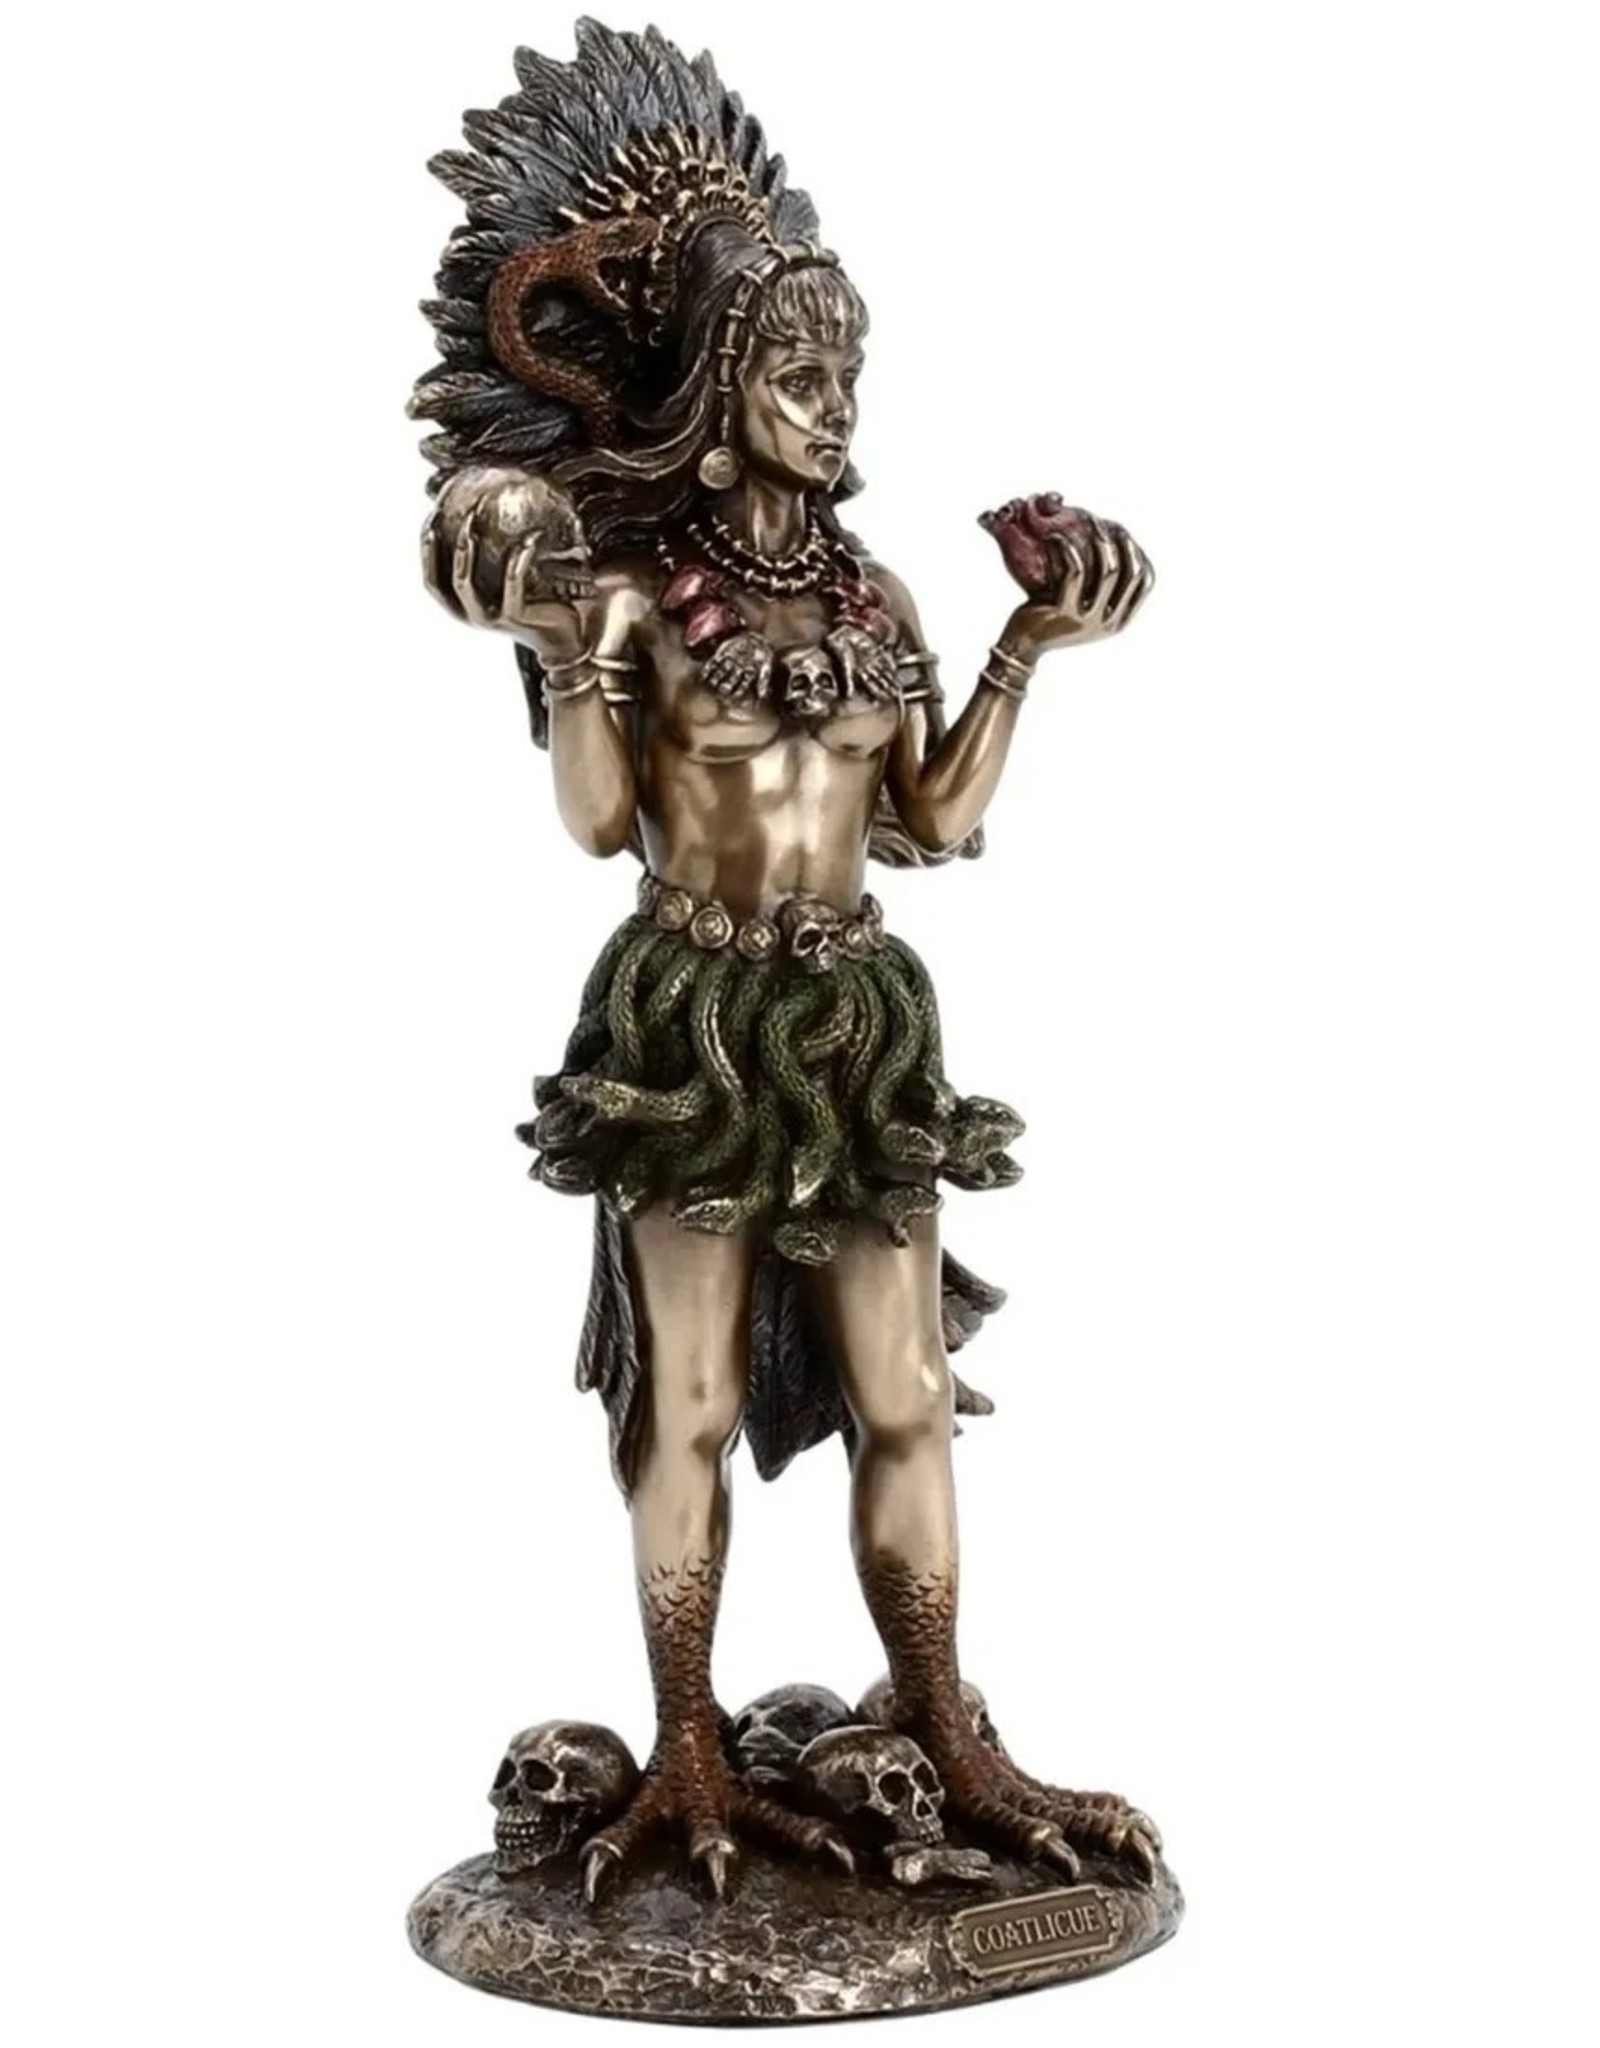 Veronese Design Giftware Figurines Collectables -  Aztec goddess Coatlicue - Mother of the Gods